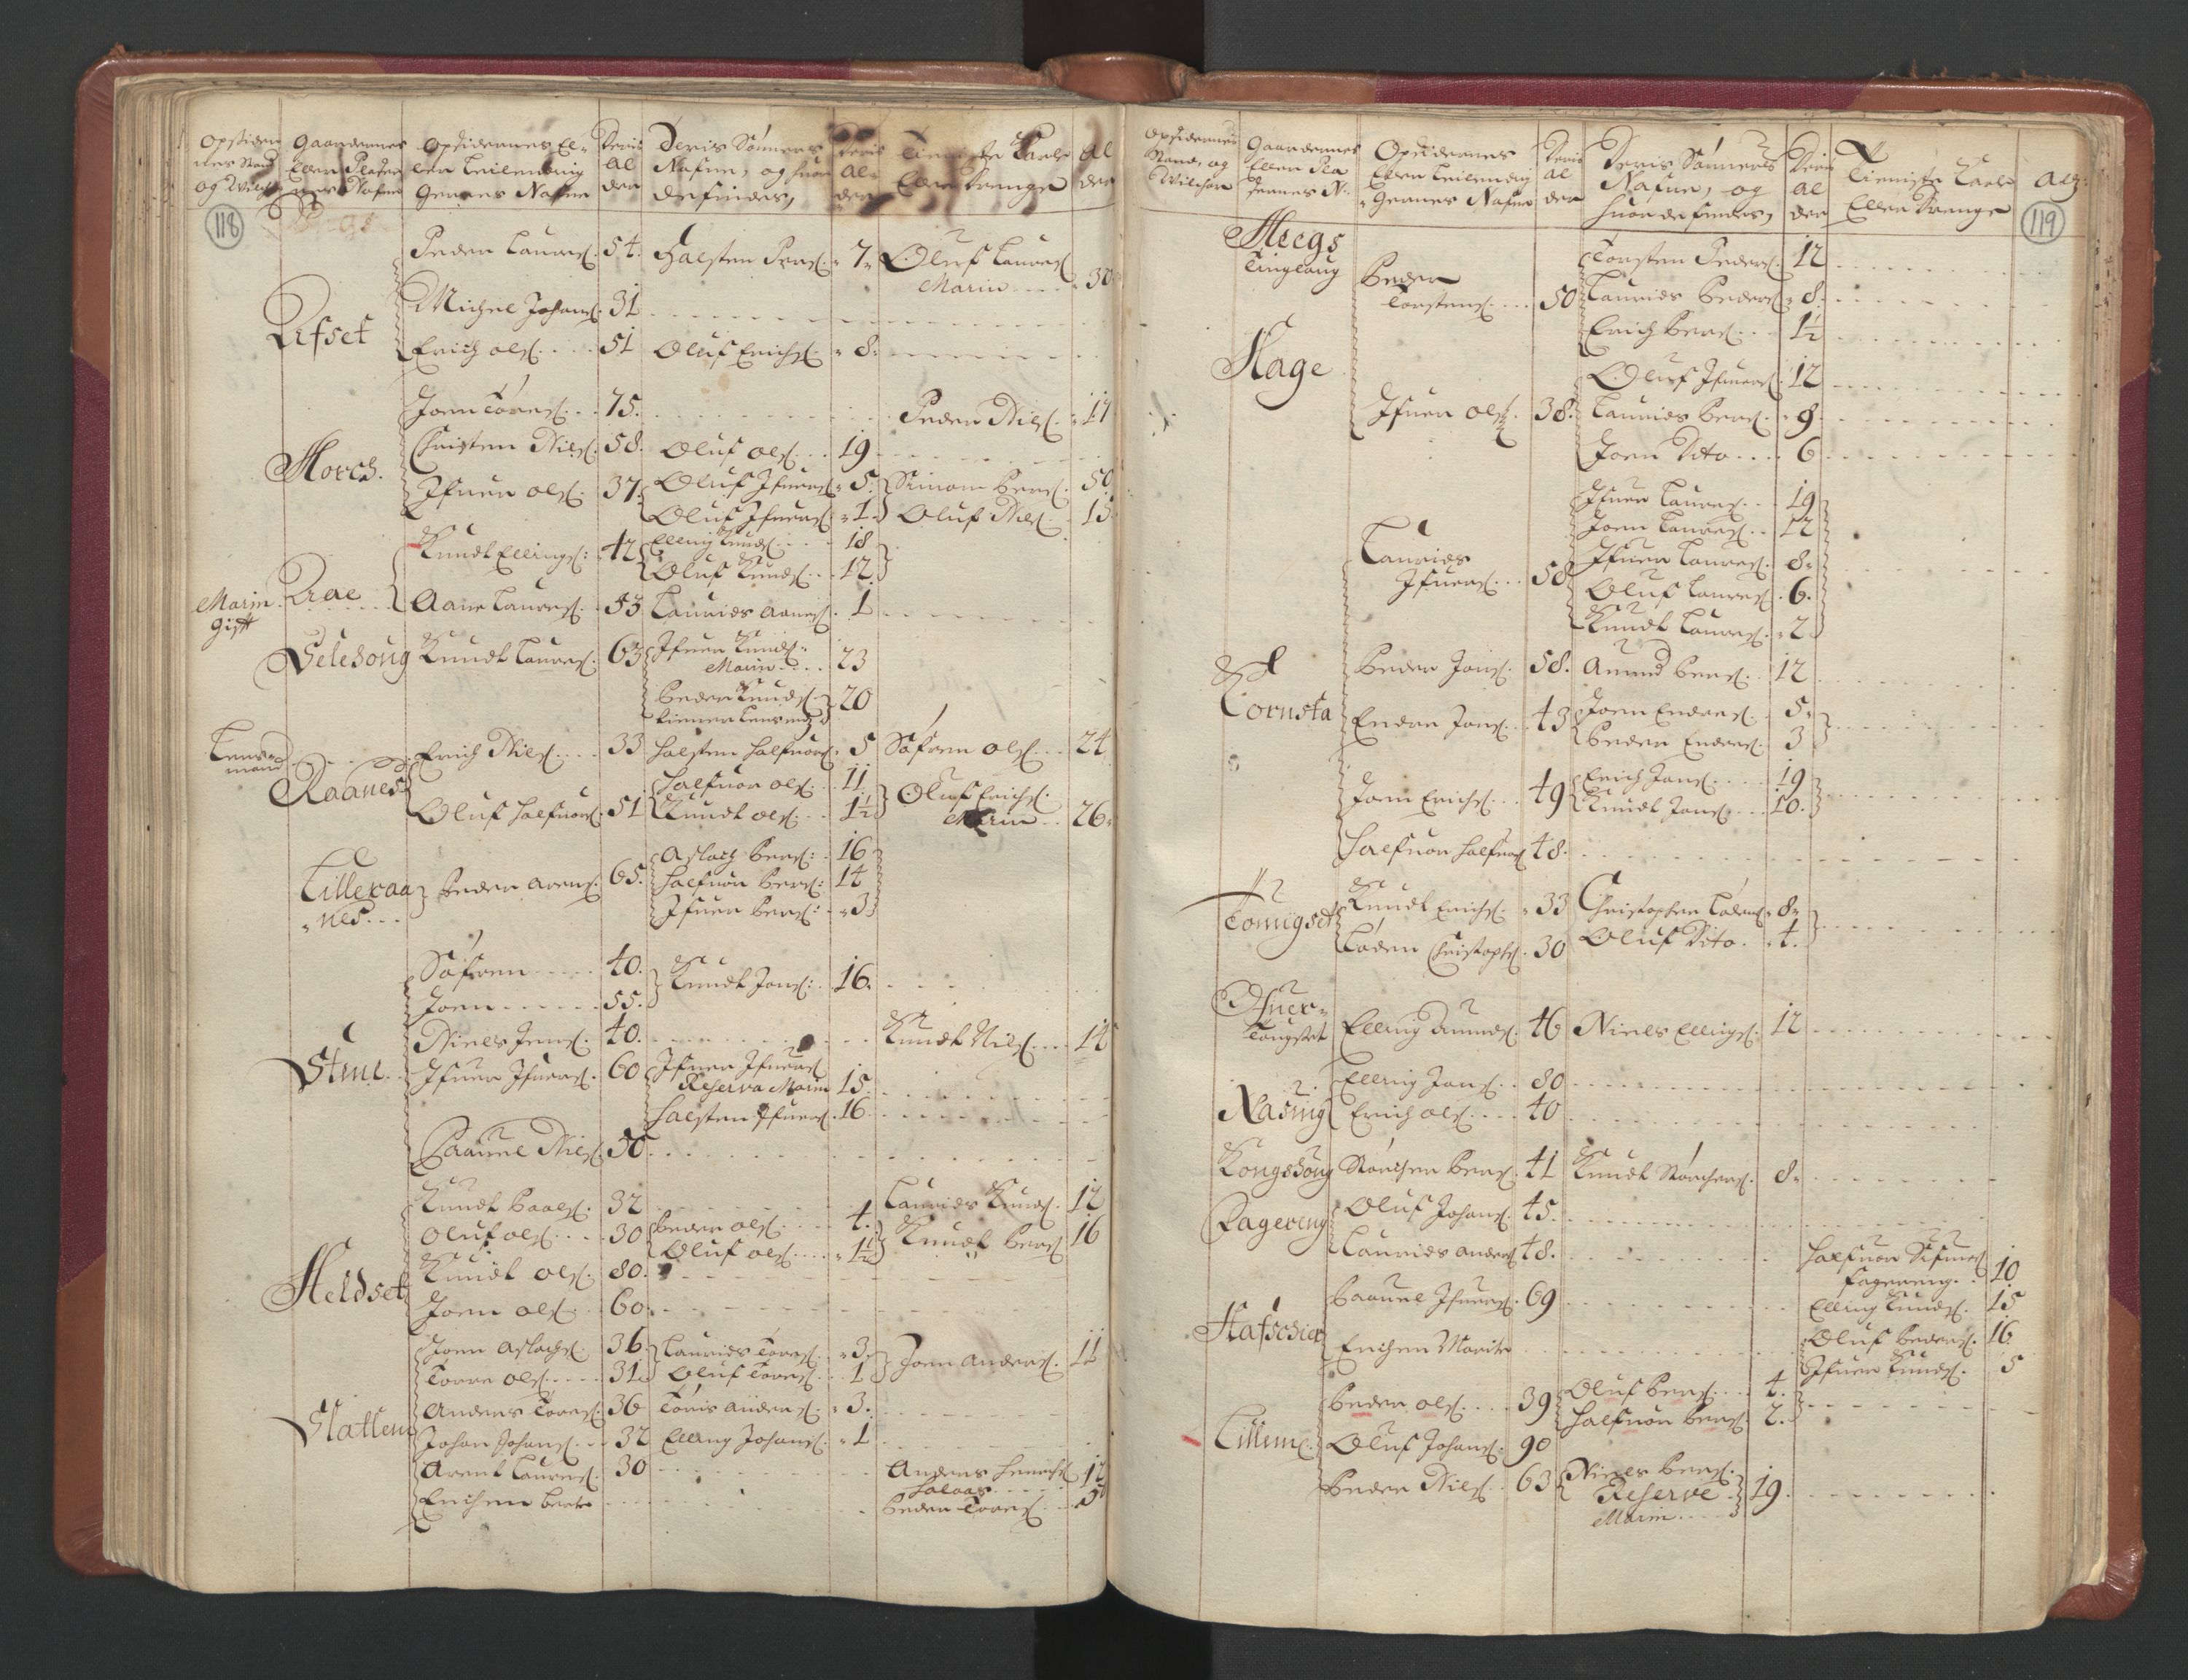 RA, Manntallet 1701, nr. 11: Nordmøre fogderi og Romsdal fogderi, 1701, s. 118-119